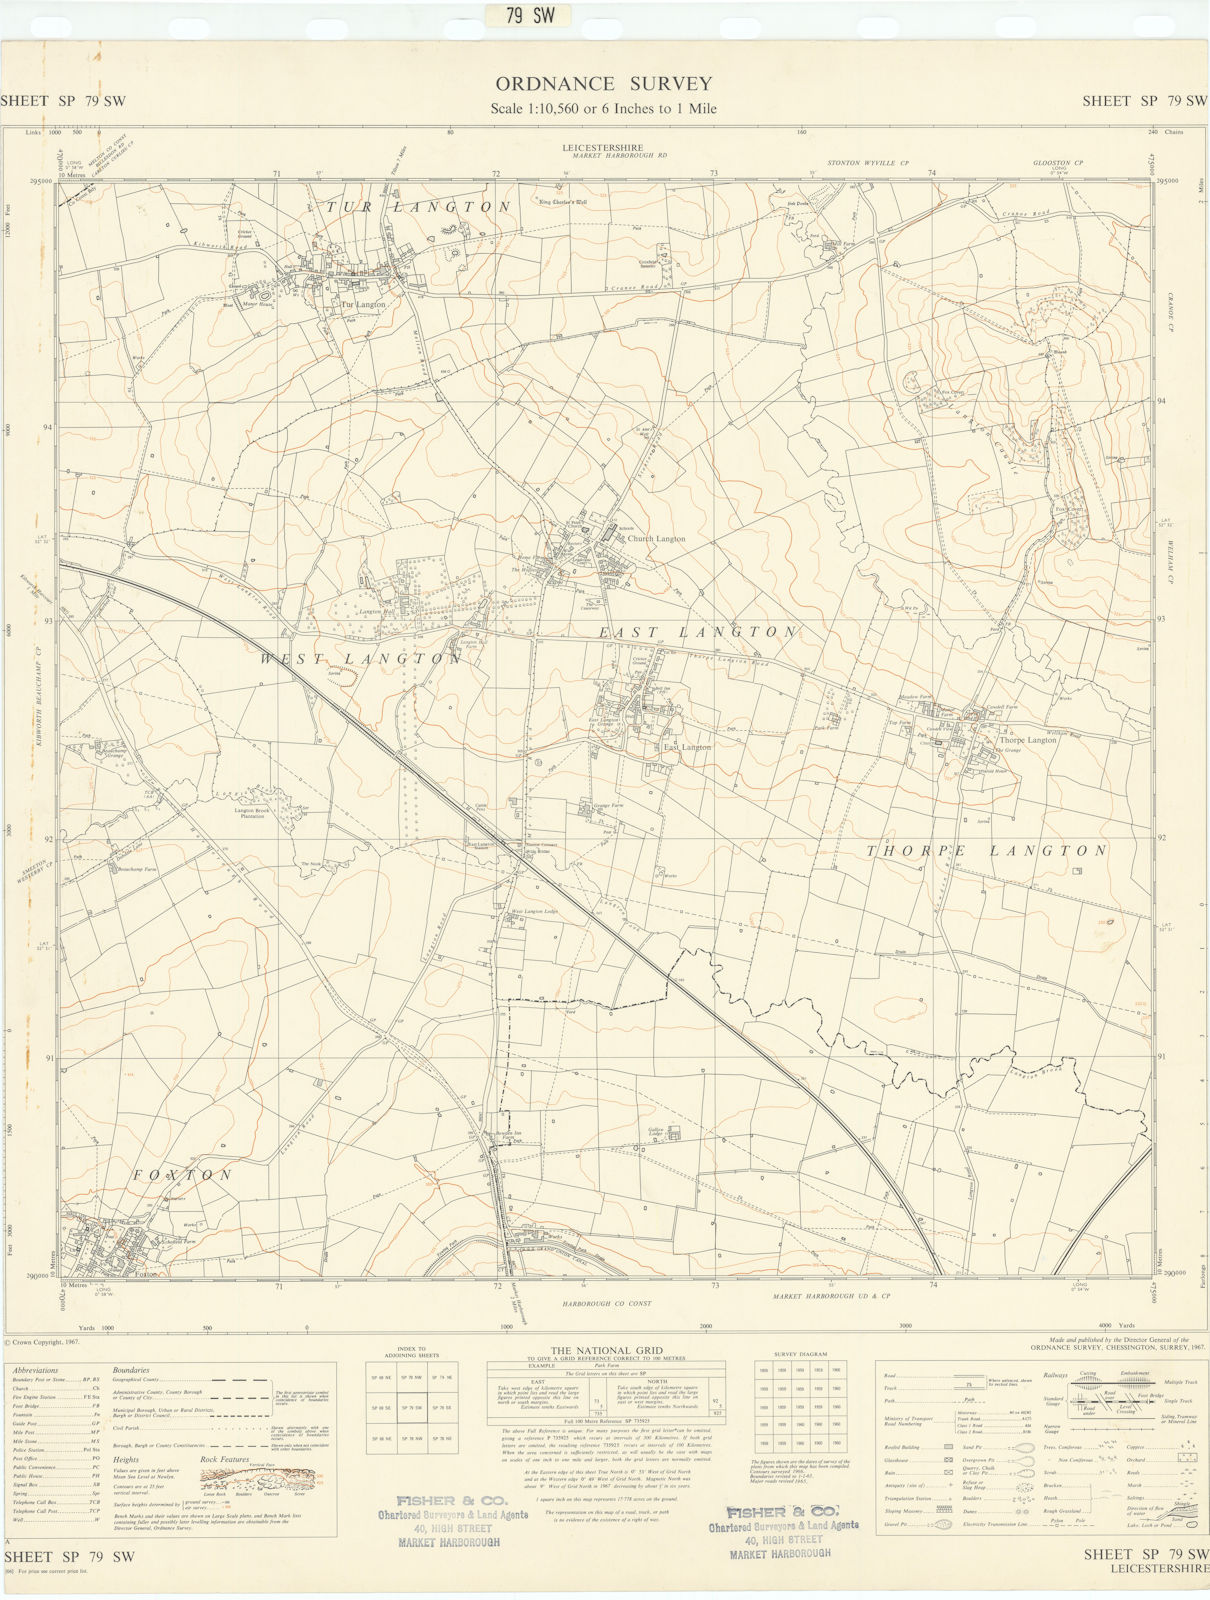 Ordnance Survey SP79SW Leics Foxton Tur East West Thorpe Langton 1967 old map